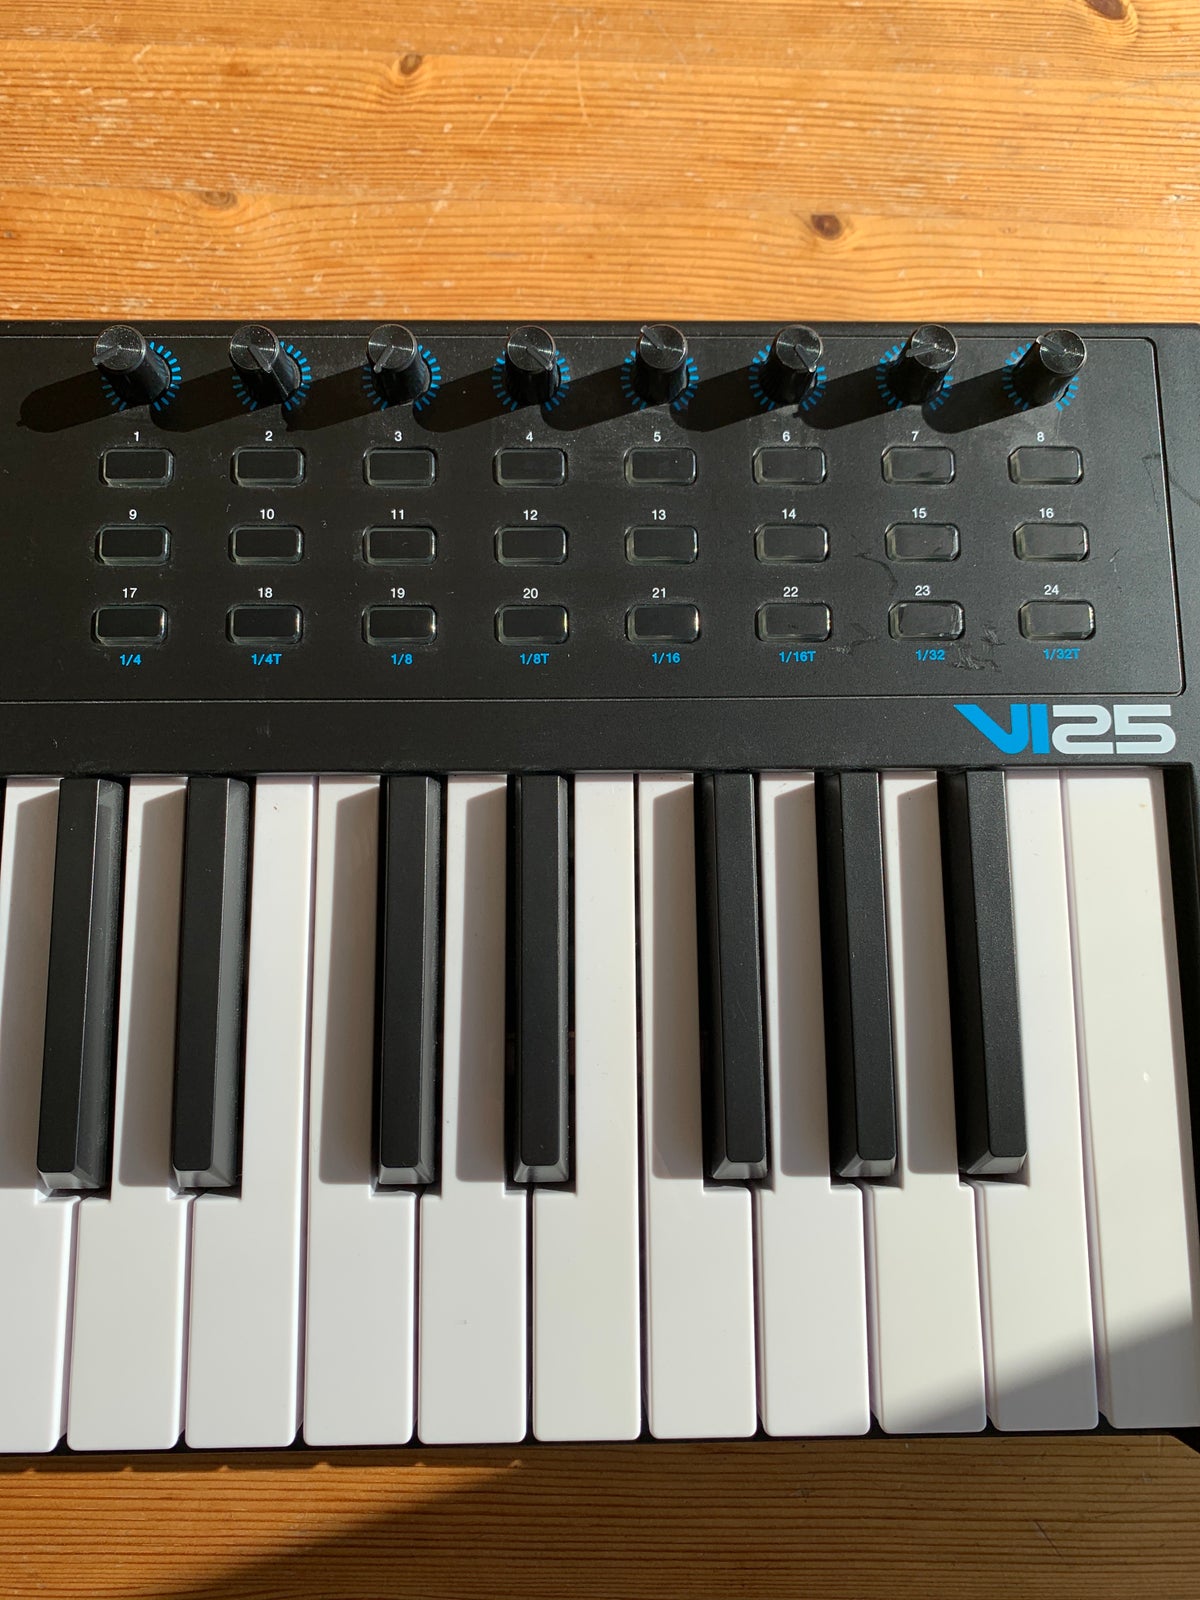 Midi keyboard, Alesis VI25